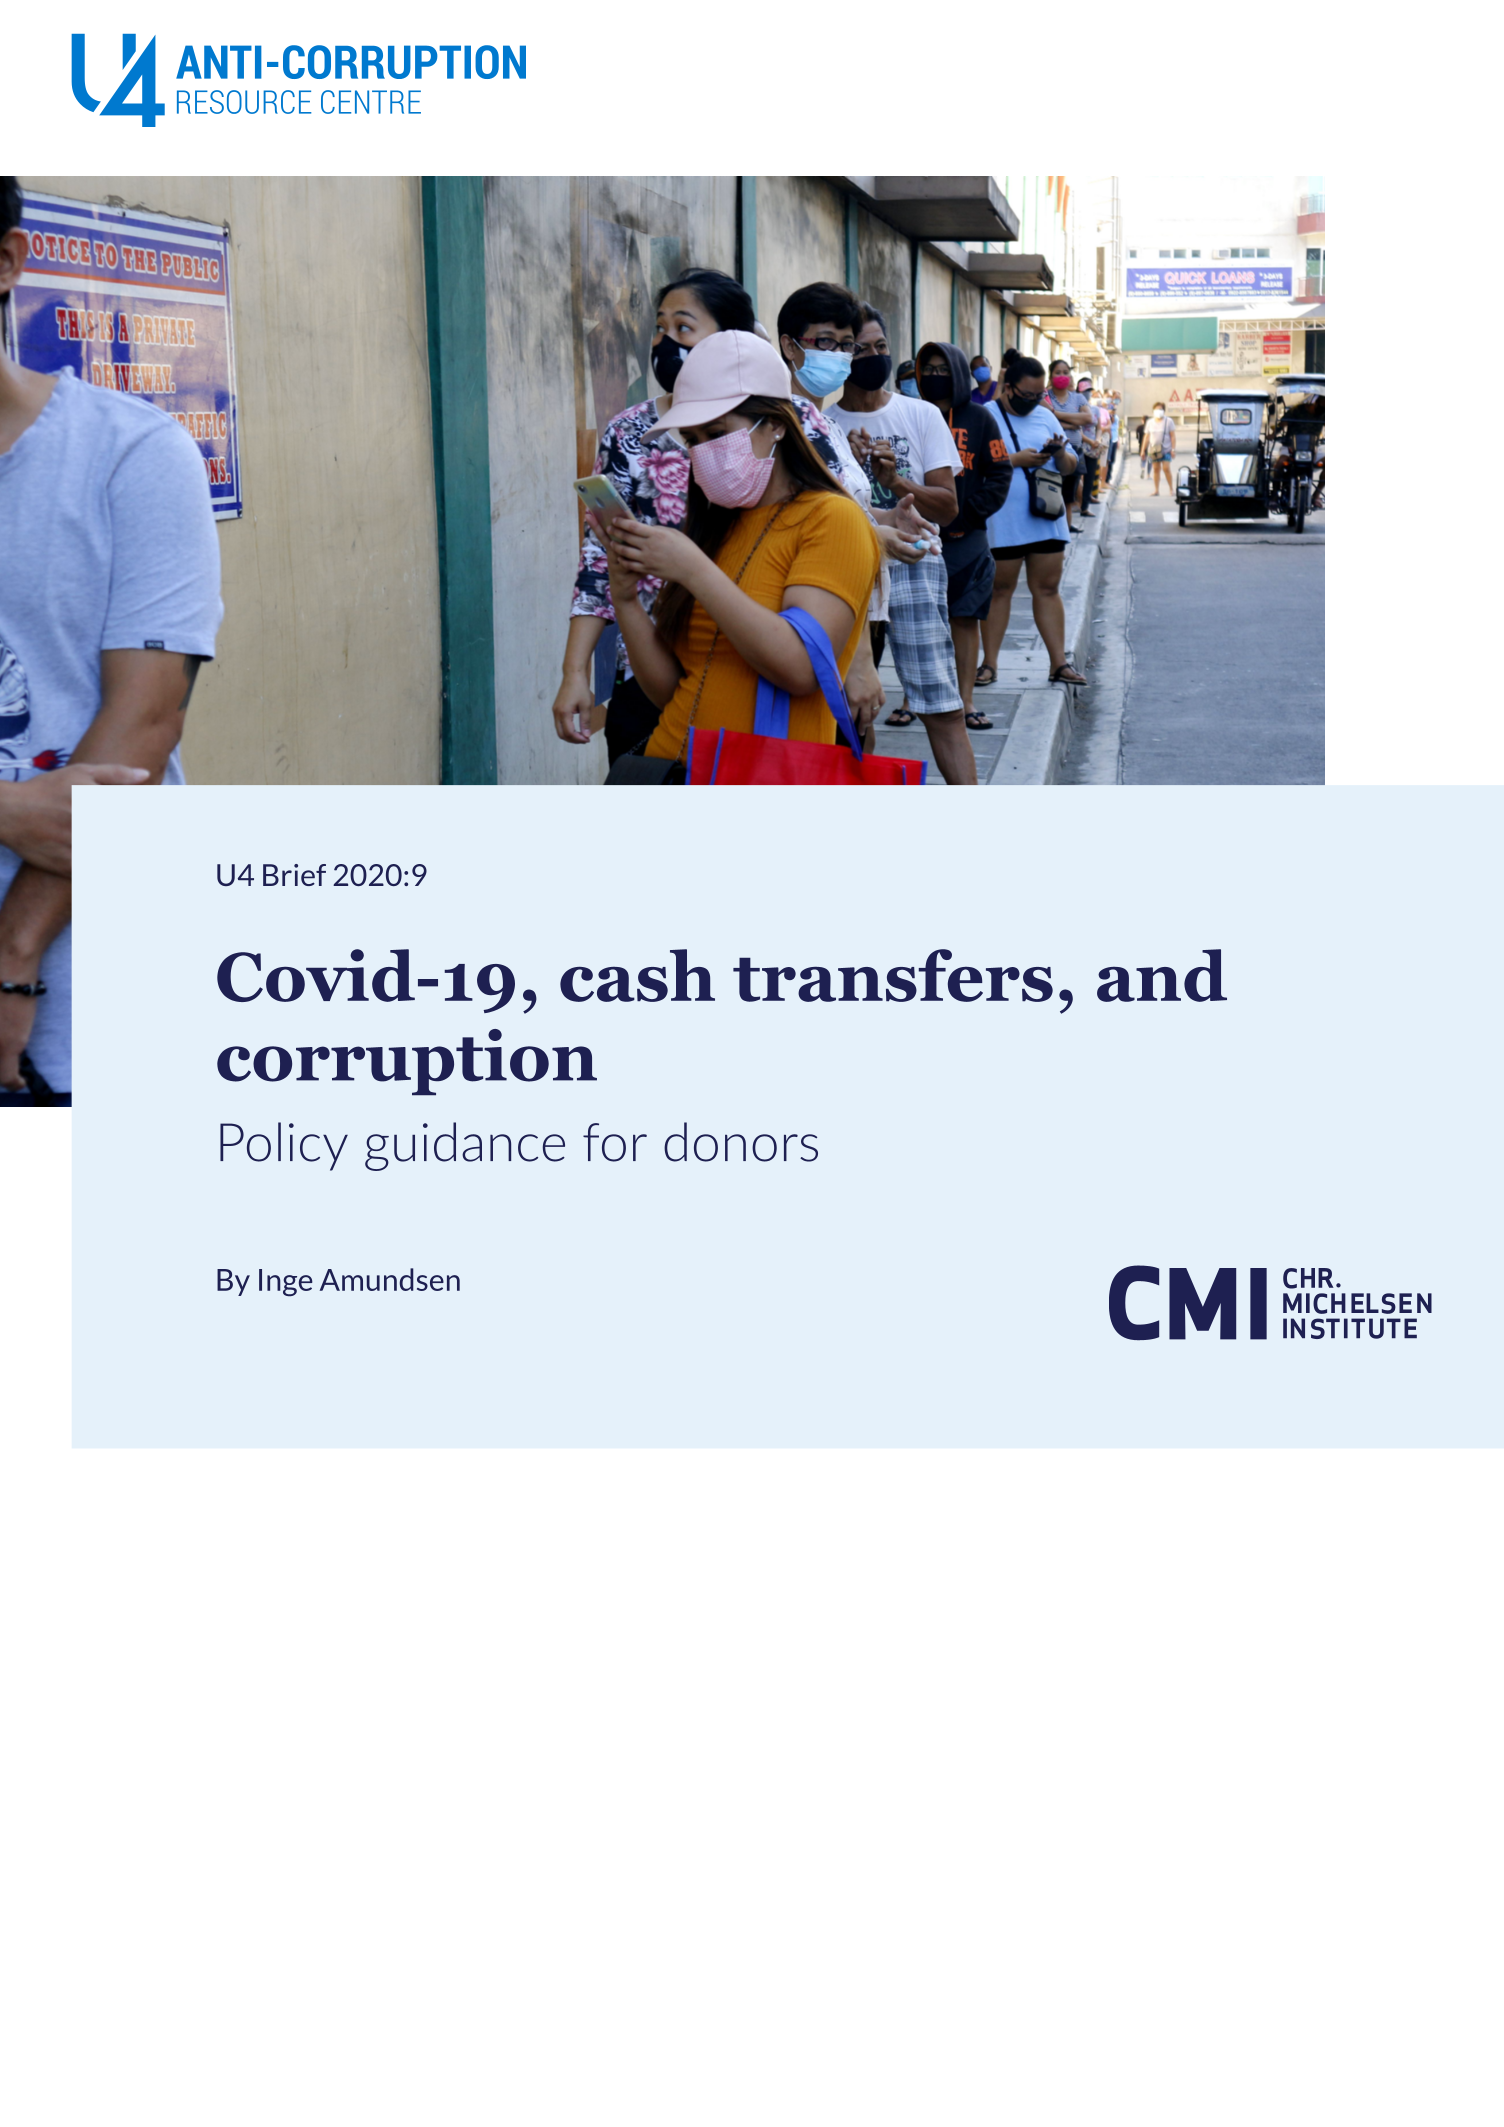 Covid-19, cash transfers, and corruption